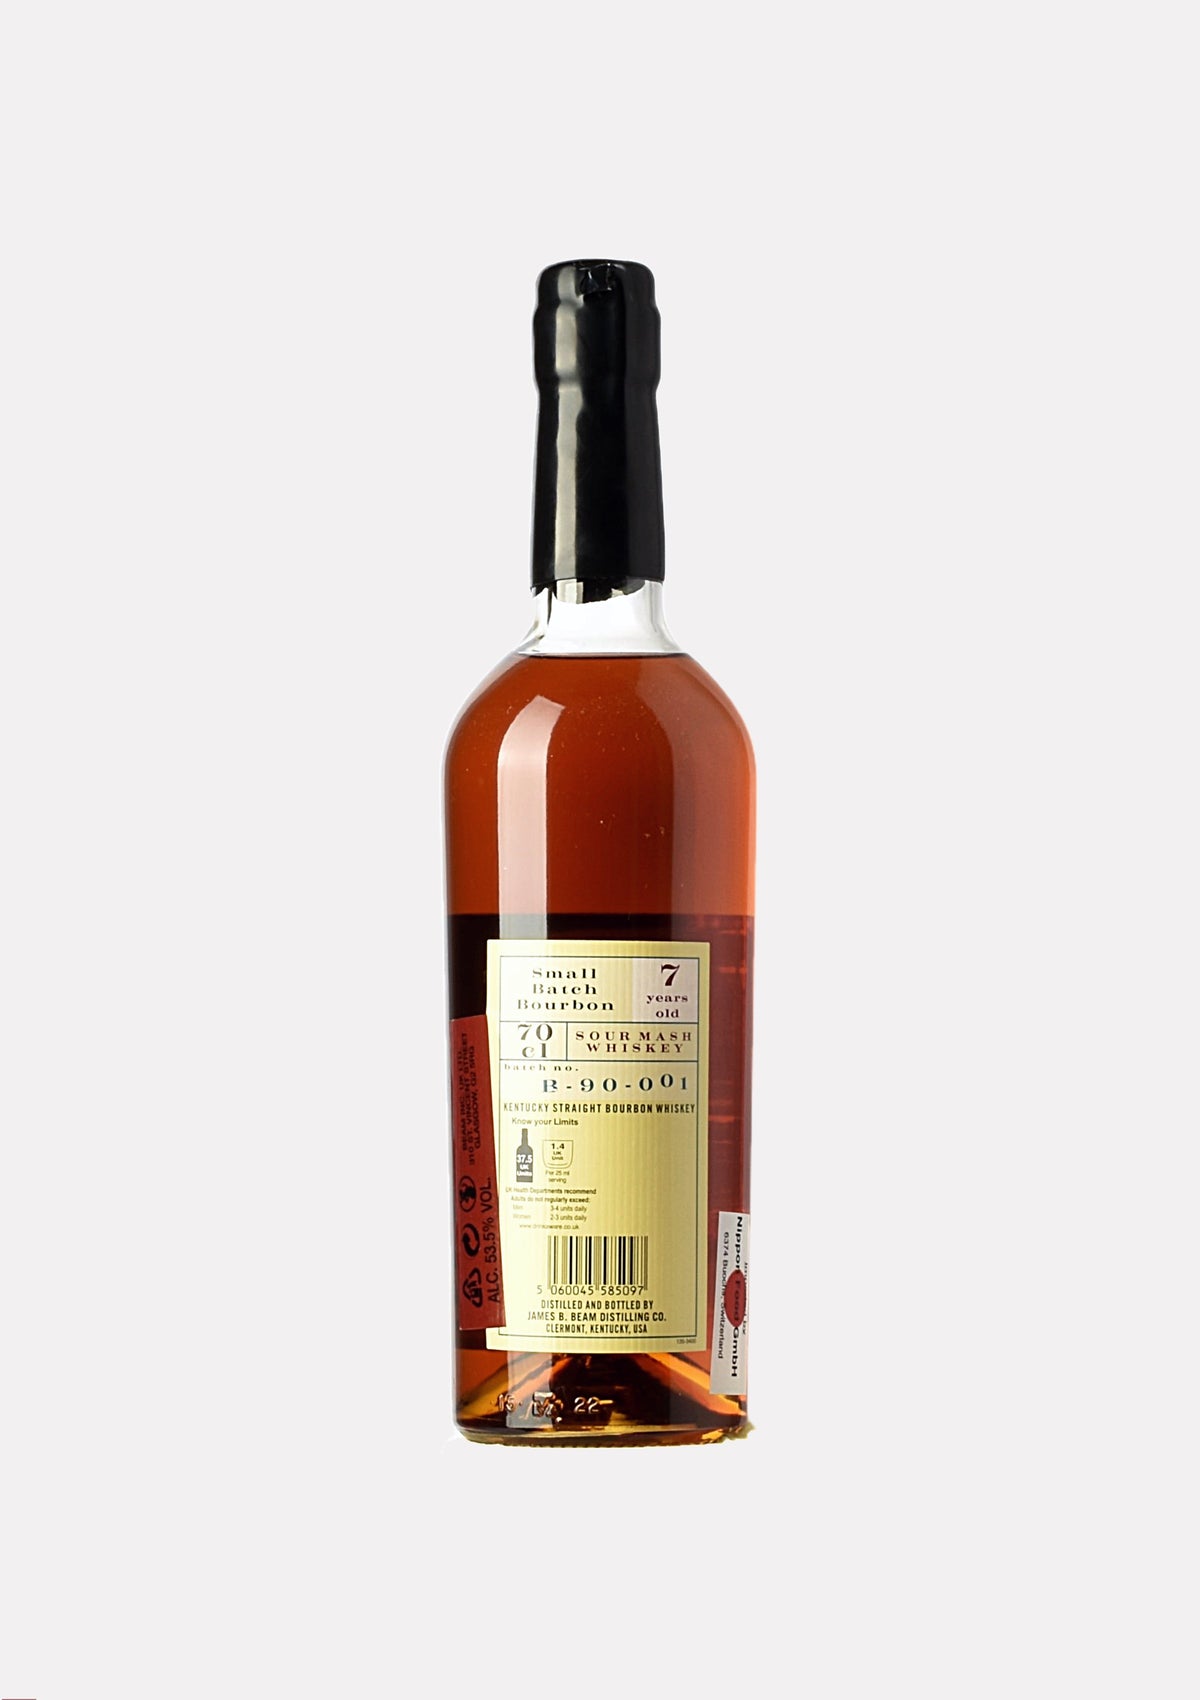 Baker`s Kentucky Straight Bourbon Whiskey 7 Jahre 107 Proof Batch: B-90-001